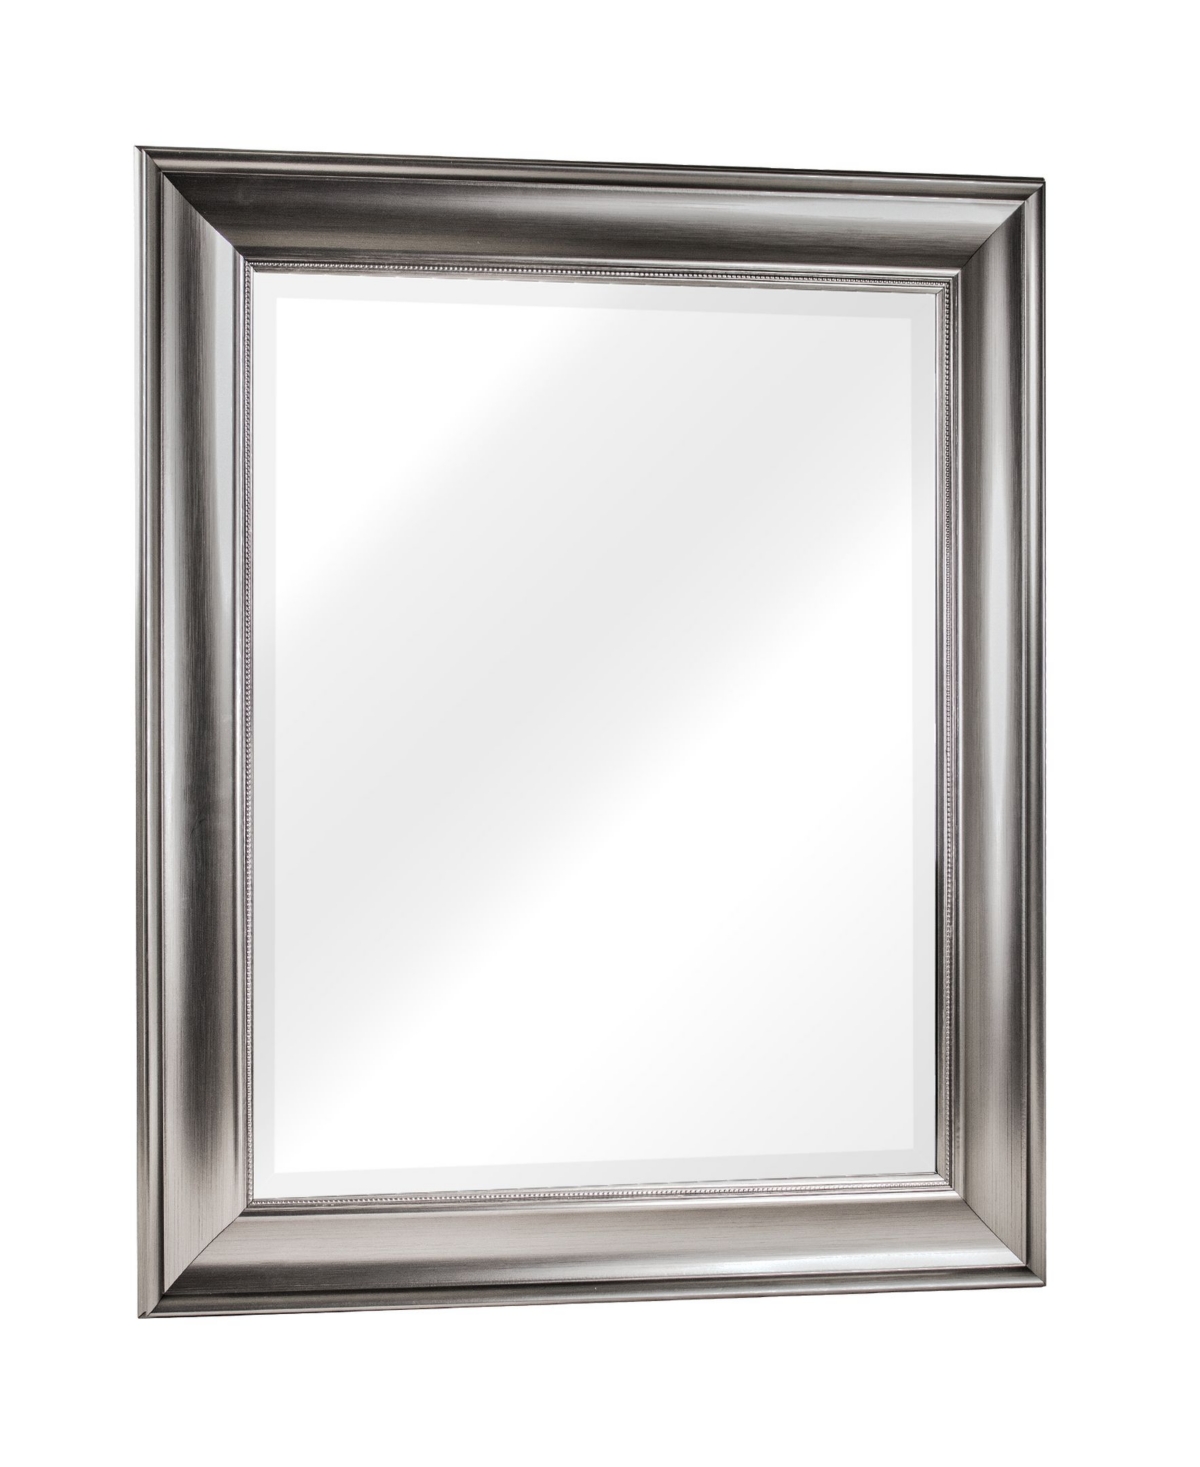 American Art Decor Clarence Silver Wall Vanity Mirror - Silver-Tone